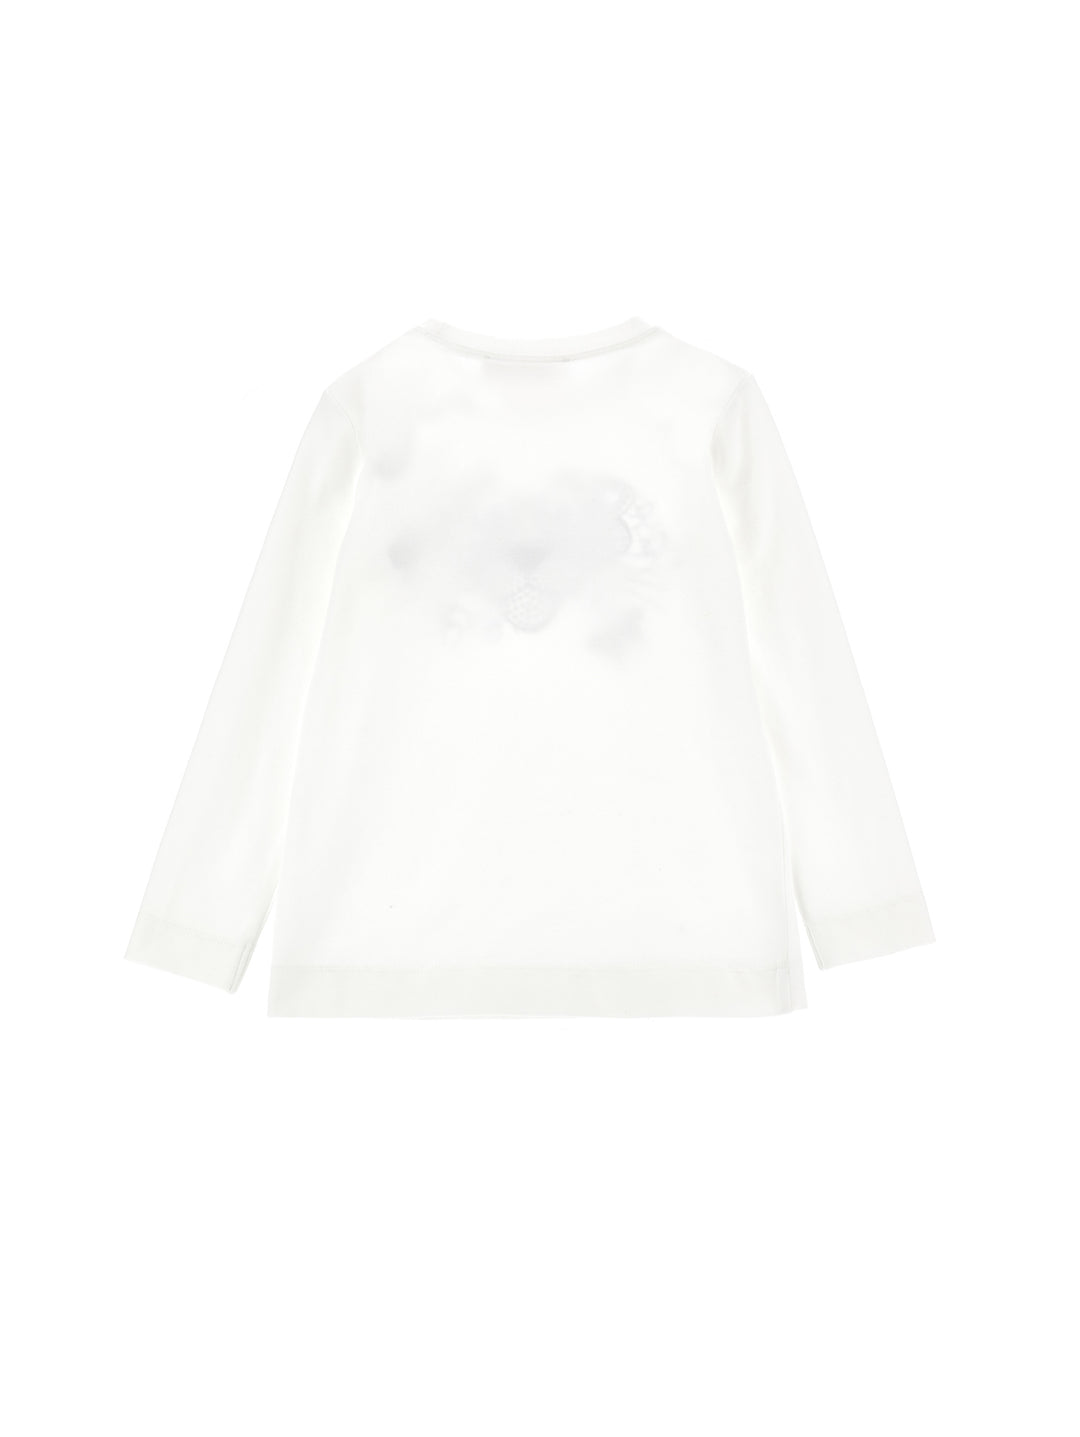 T-shirt bianca bambina a maniche lunghe con stampa 'Pantera Rosa'